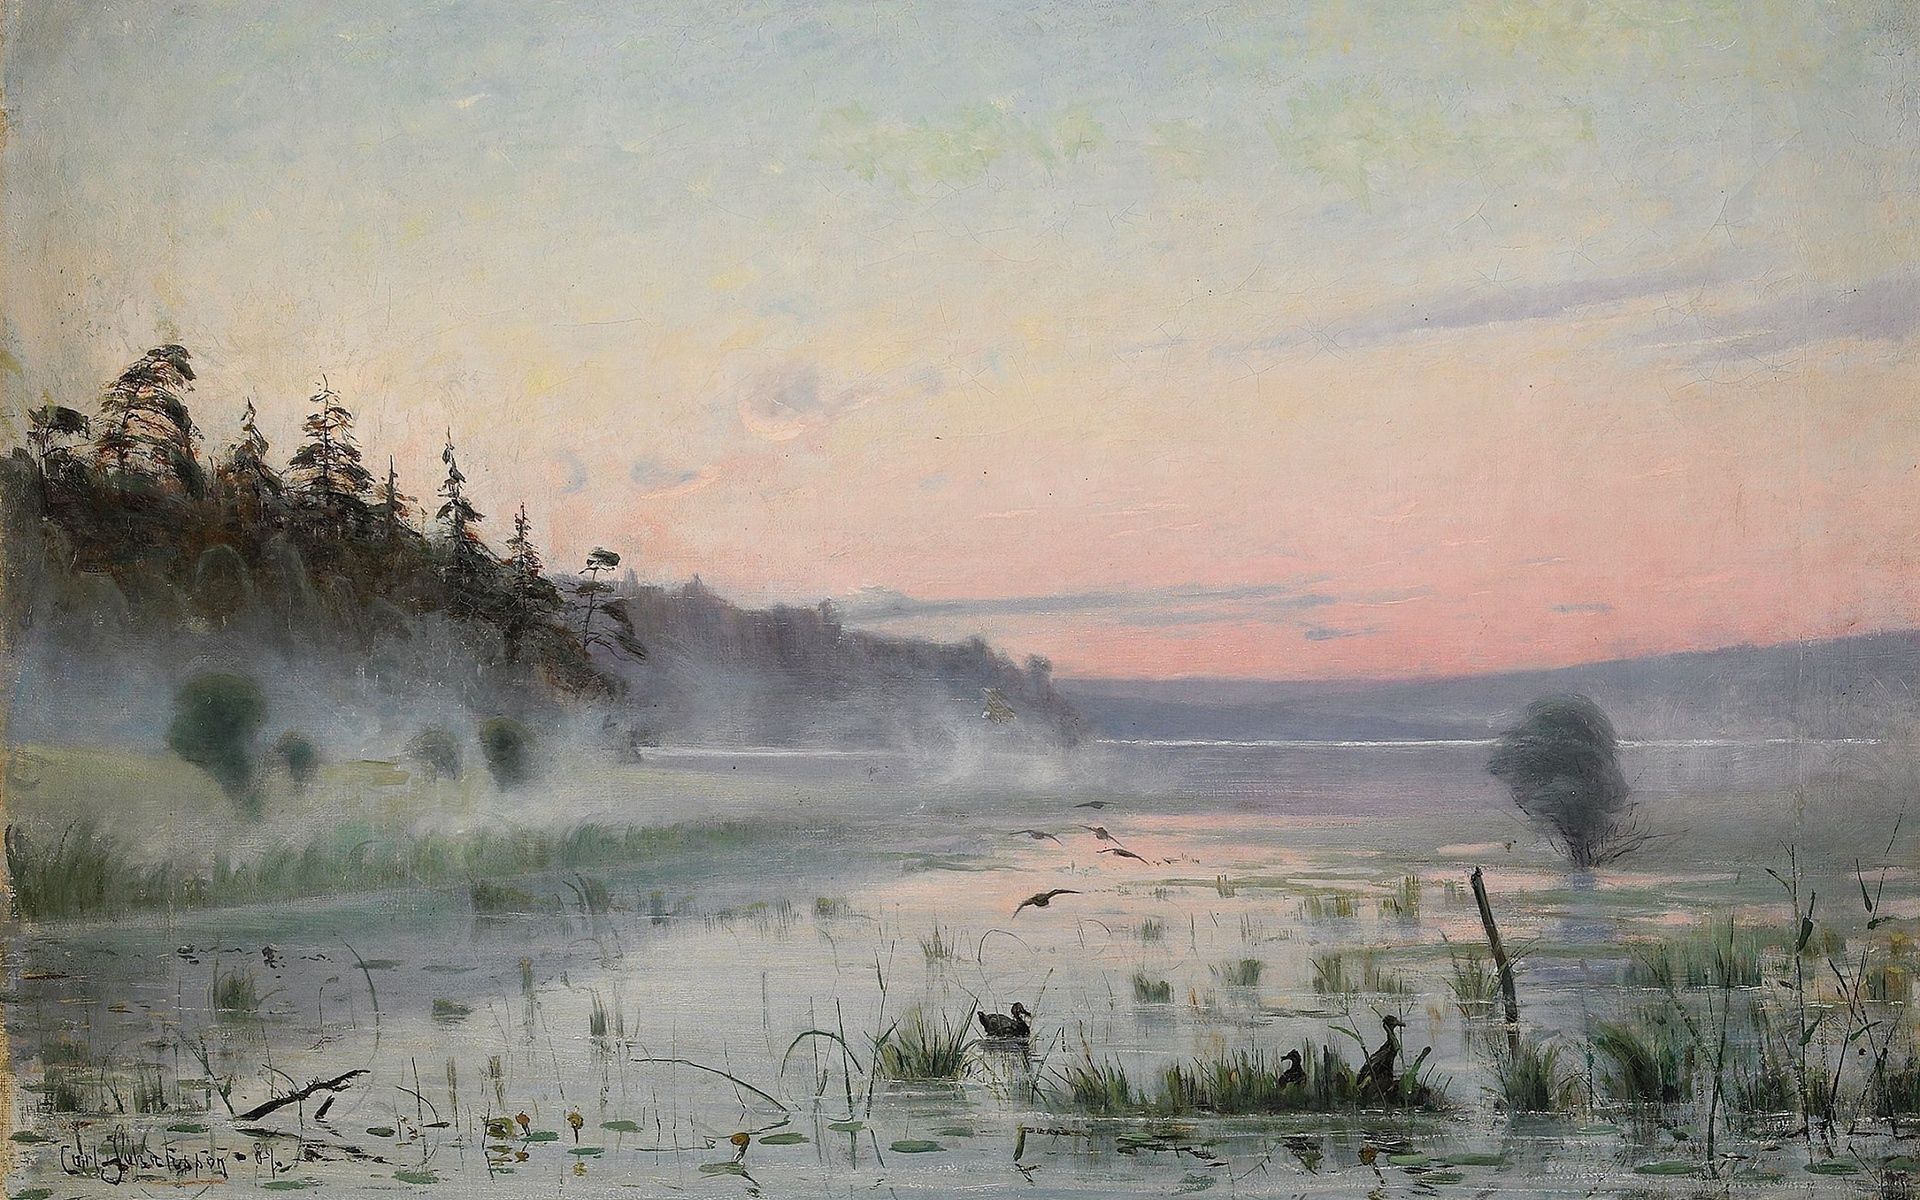 morning, ducks, lake, nature, art, fog, painting, reeds